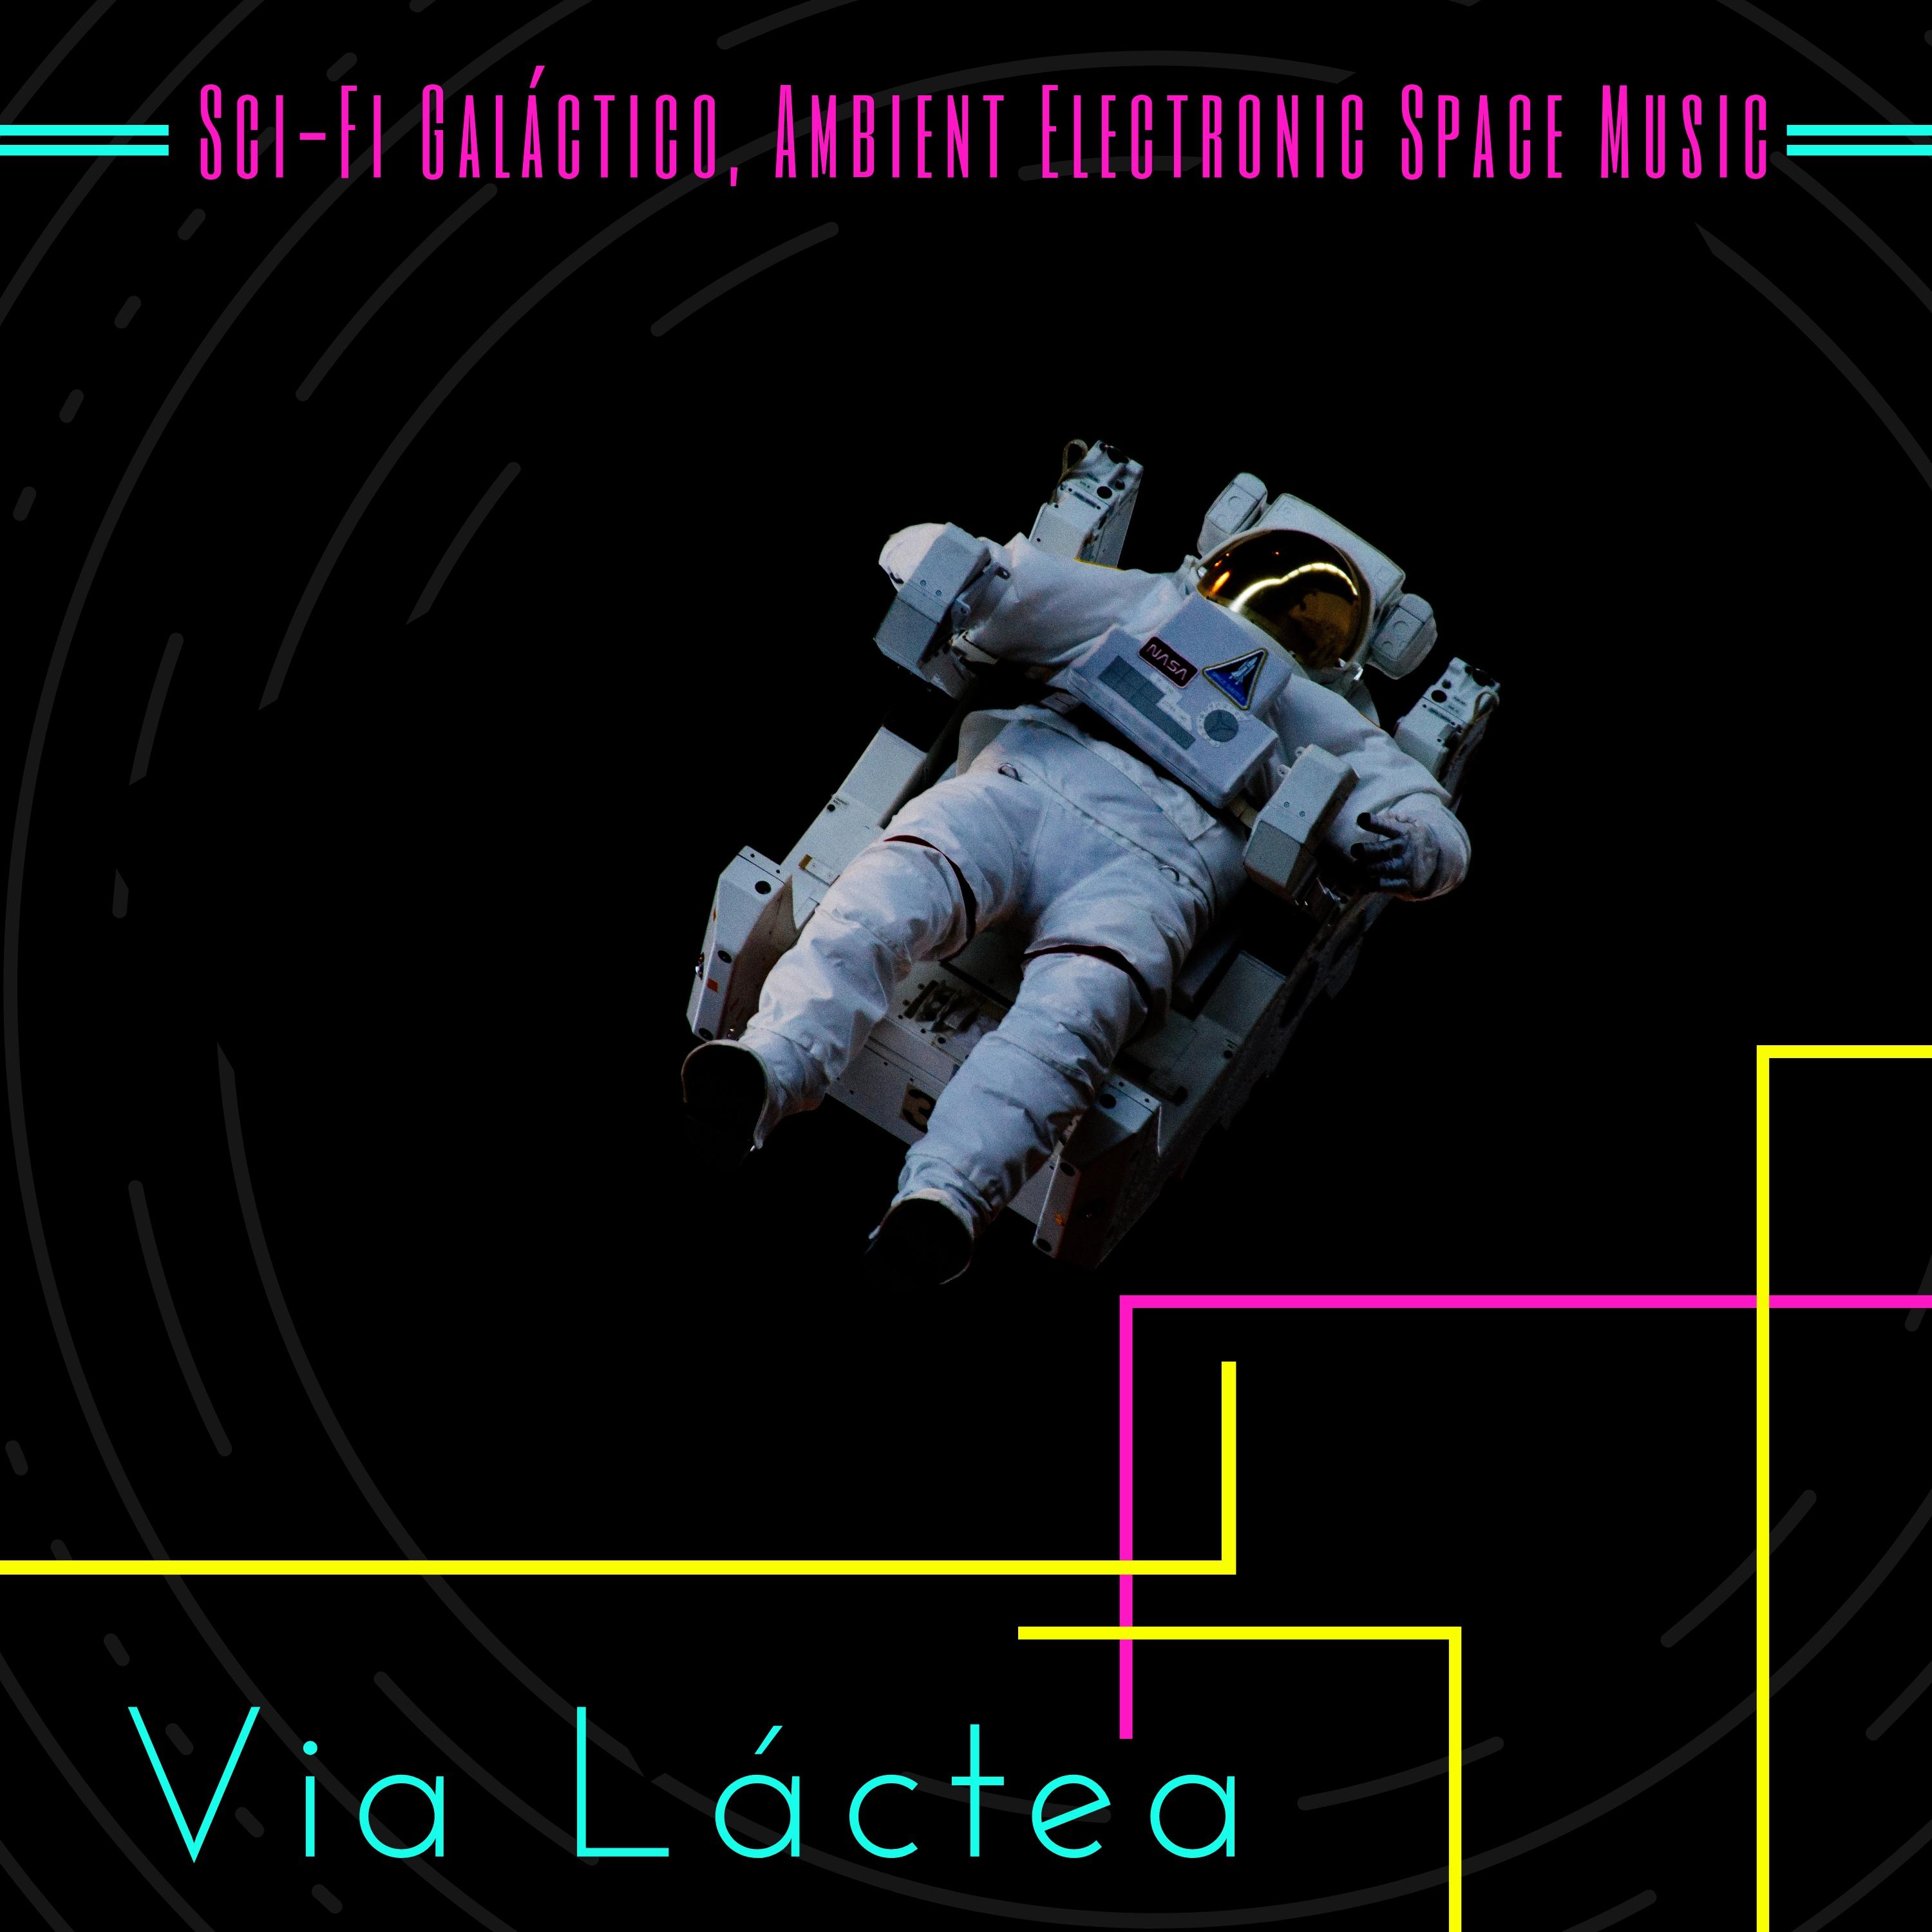 Via Láctea - Sci-Fi Galáctico, Ambient Electronic Space Music